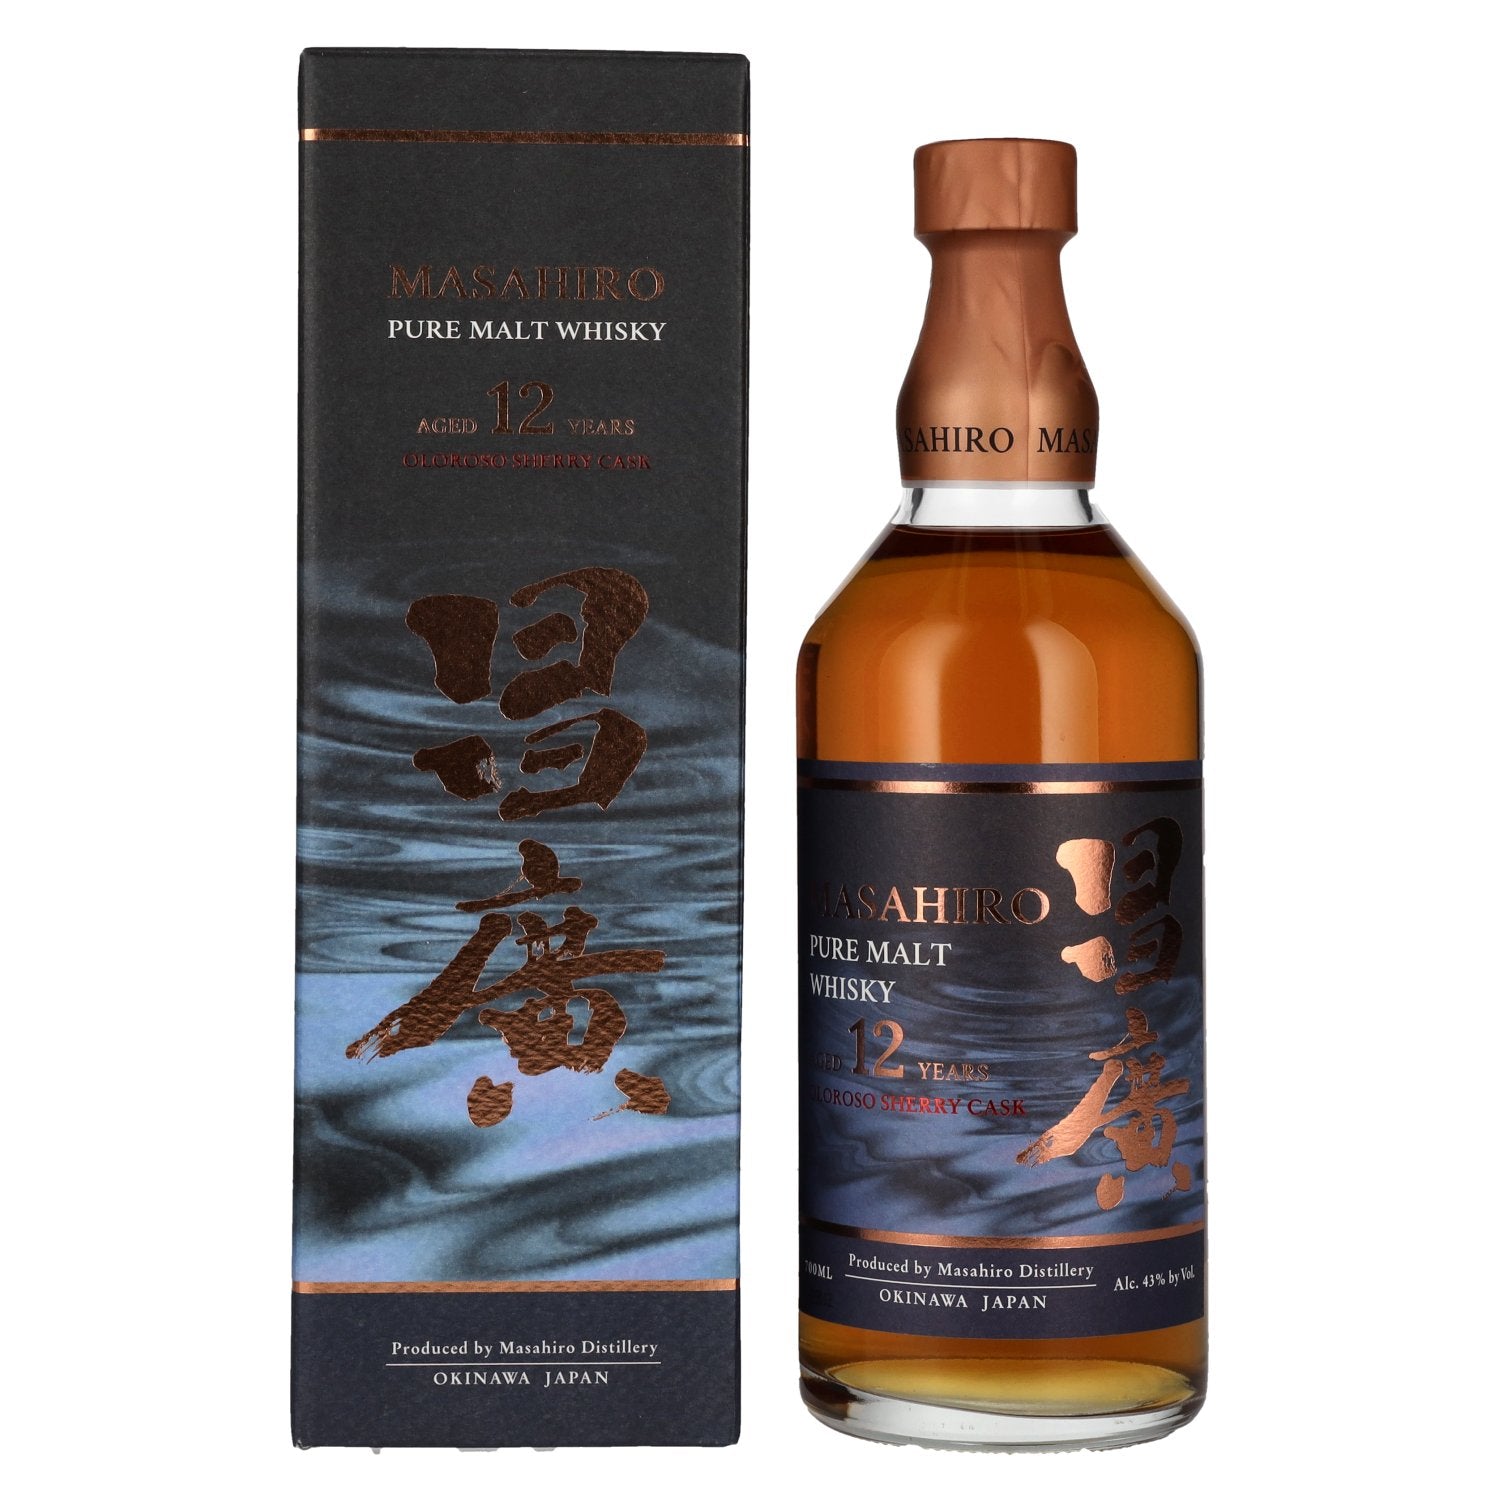 Masahiro 12 Years Old Pure Malt Whisky Oloroso Sherry Cask 43% Vol. 0,7l in Giftbox